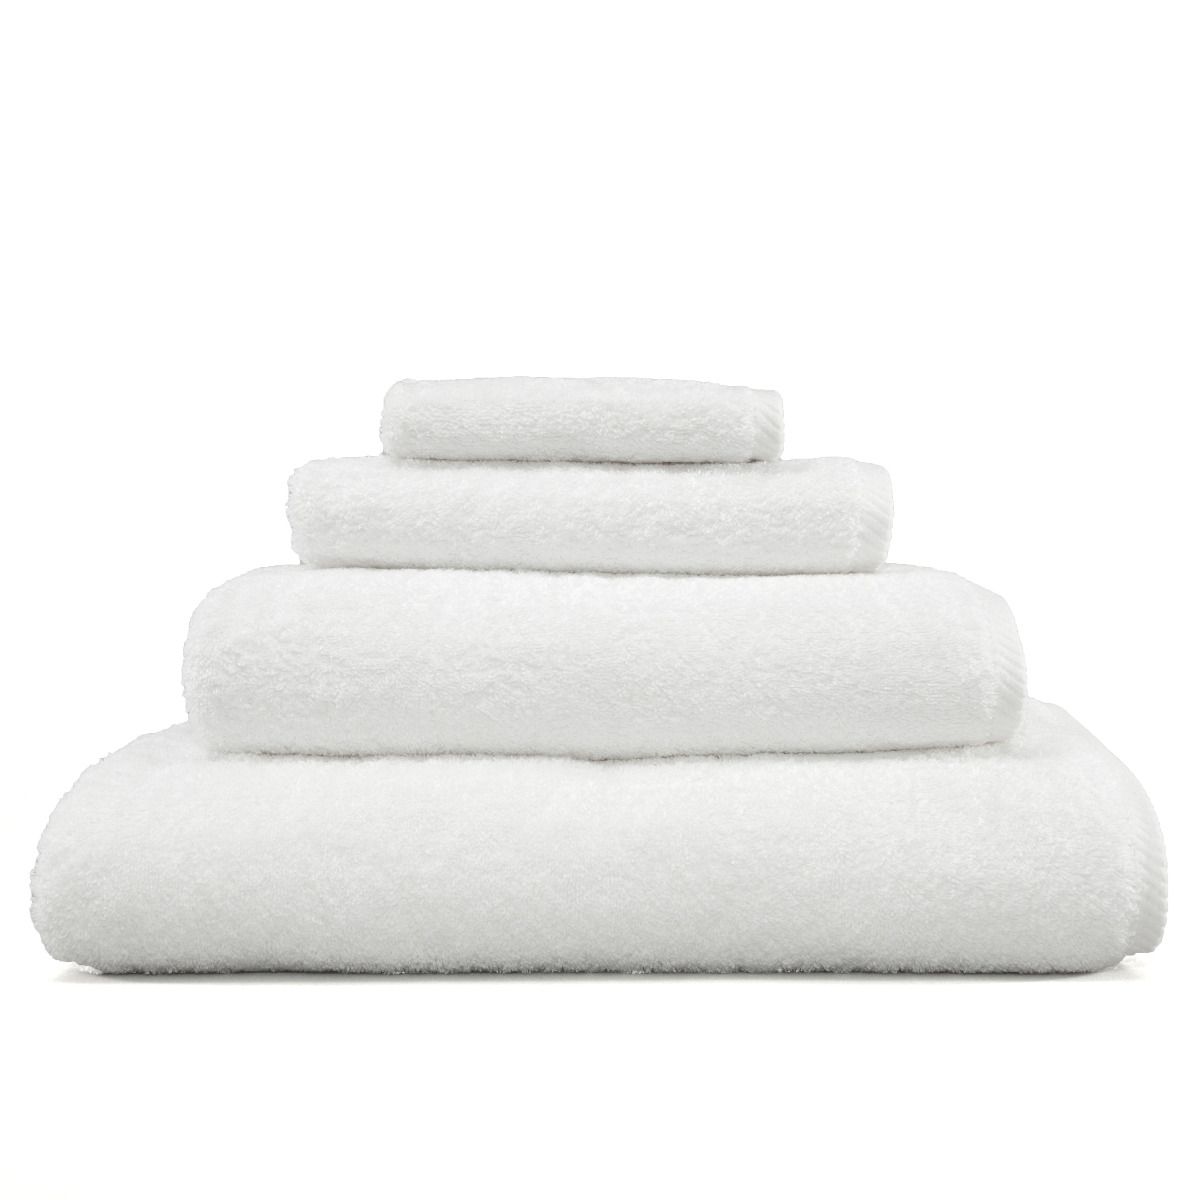 Lincove Turkish Cotton Bath Towel - Charcoal